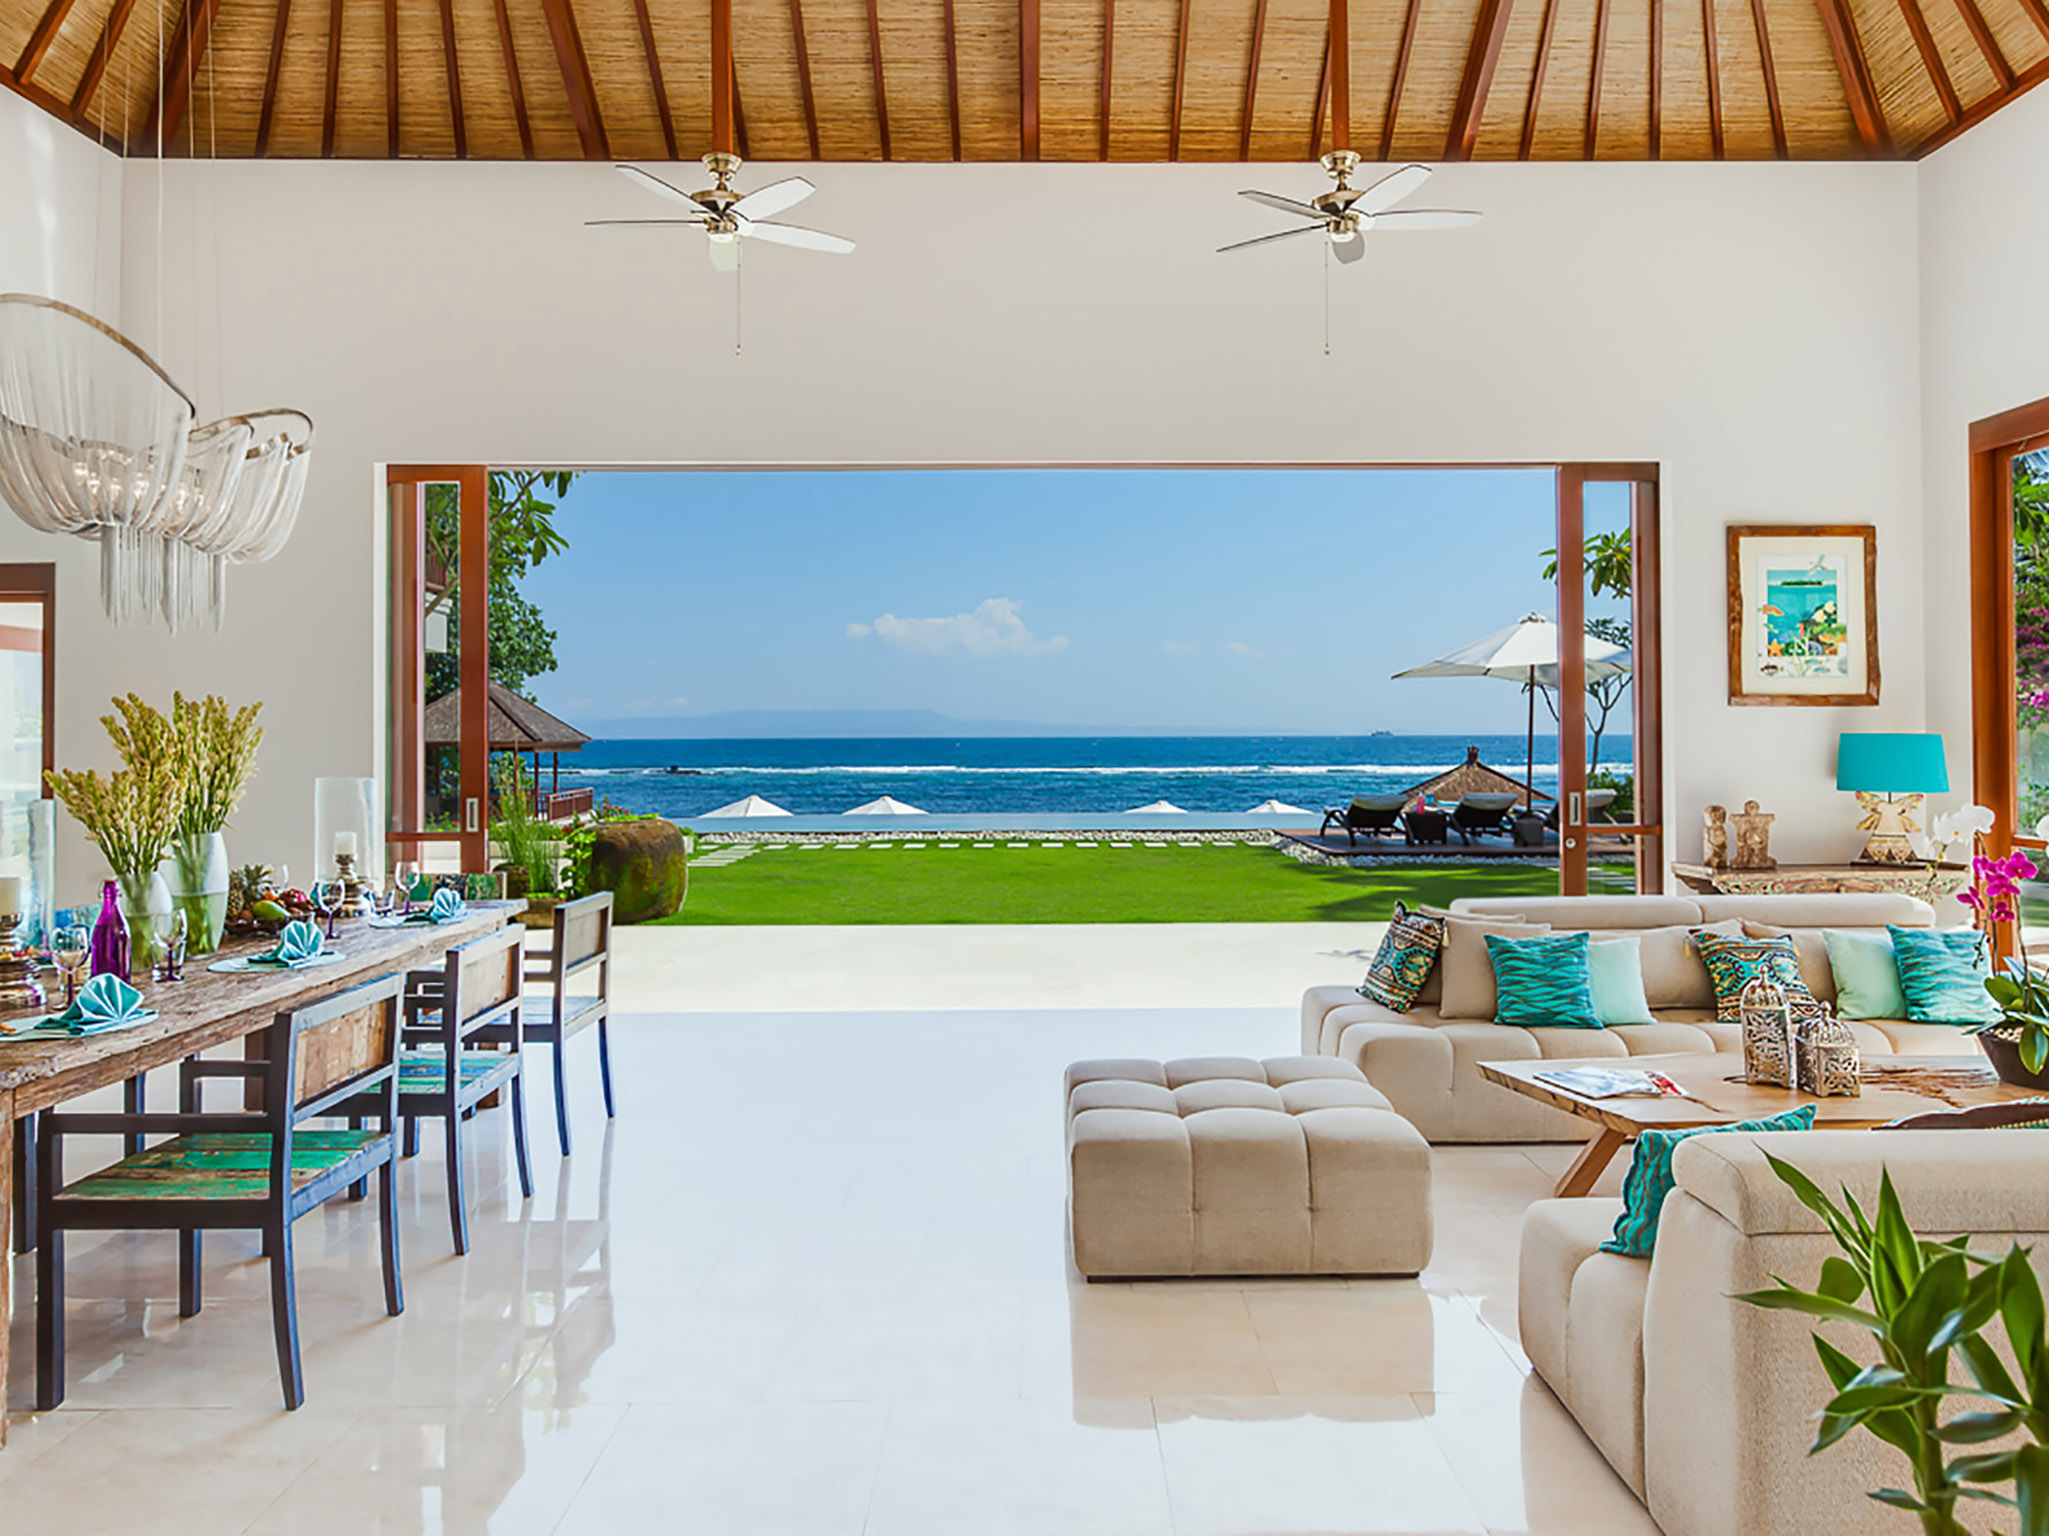 Villa Tirta Nila - View of the ocean across the lounge